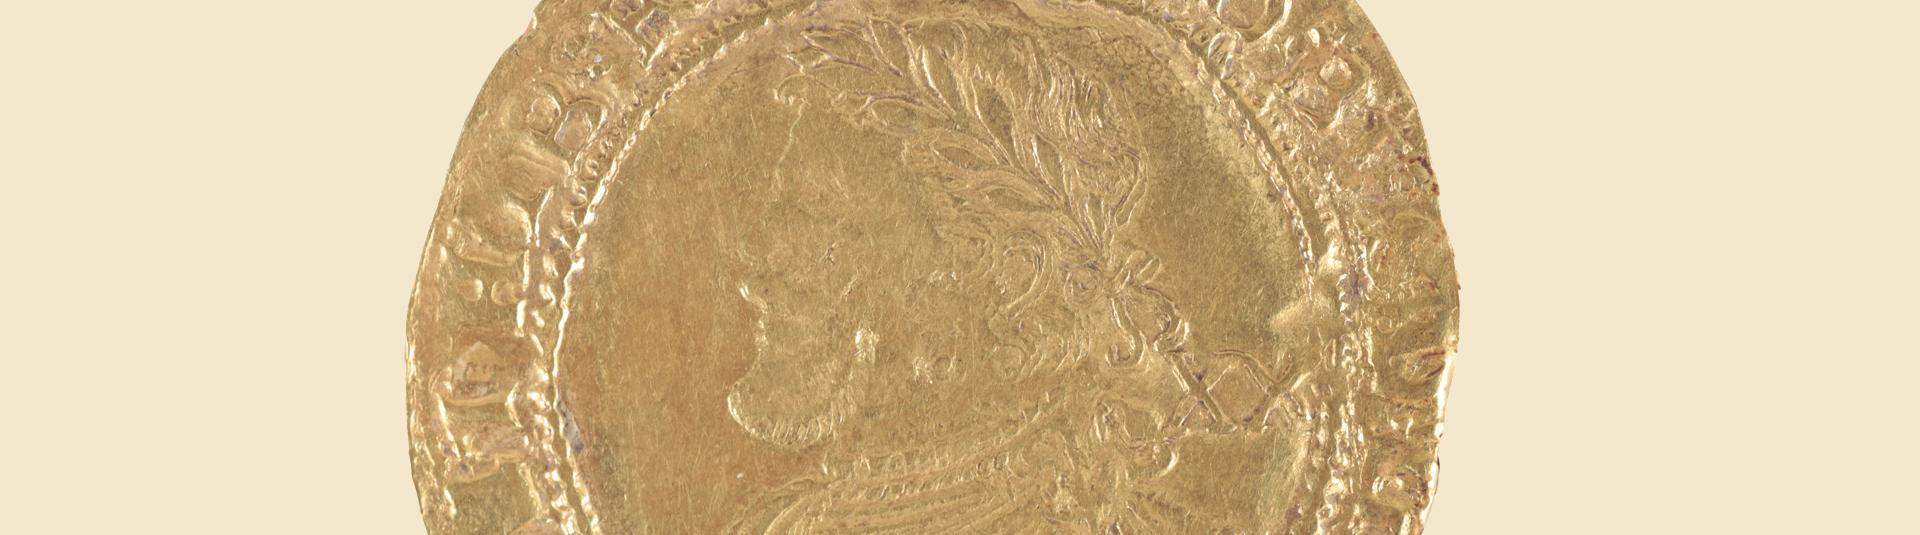 Poorton Coin Hoard